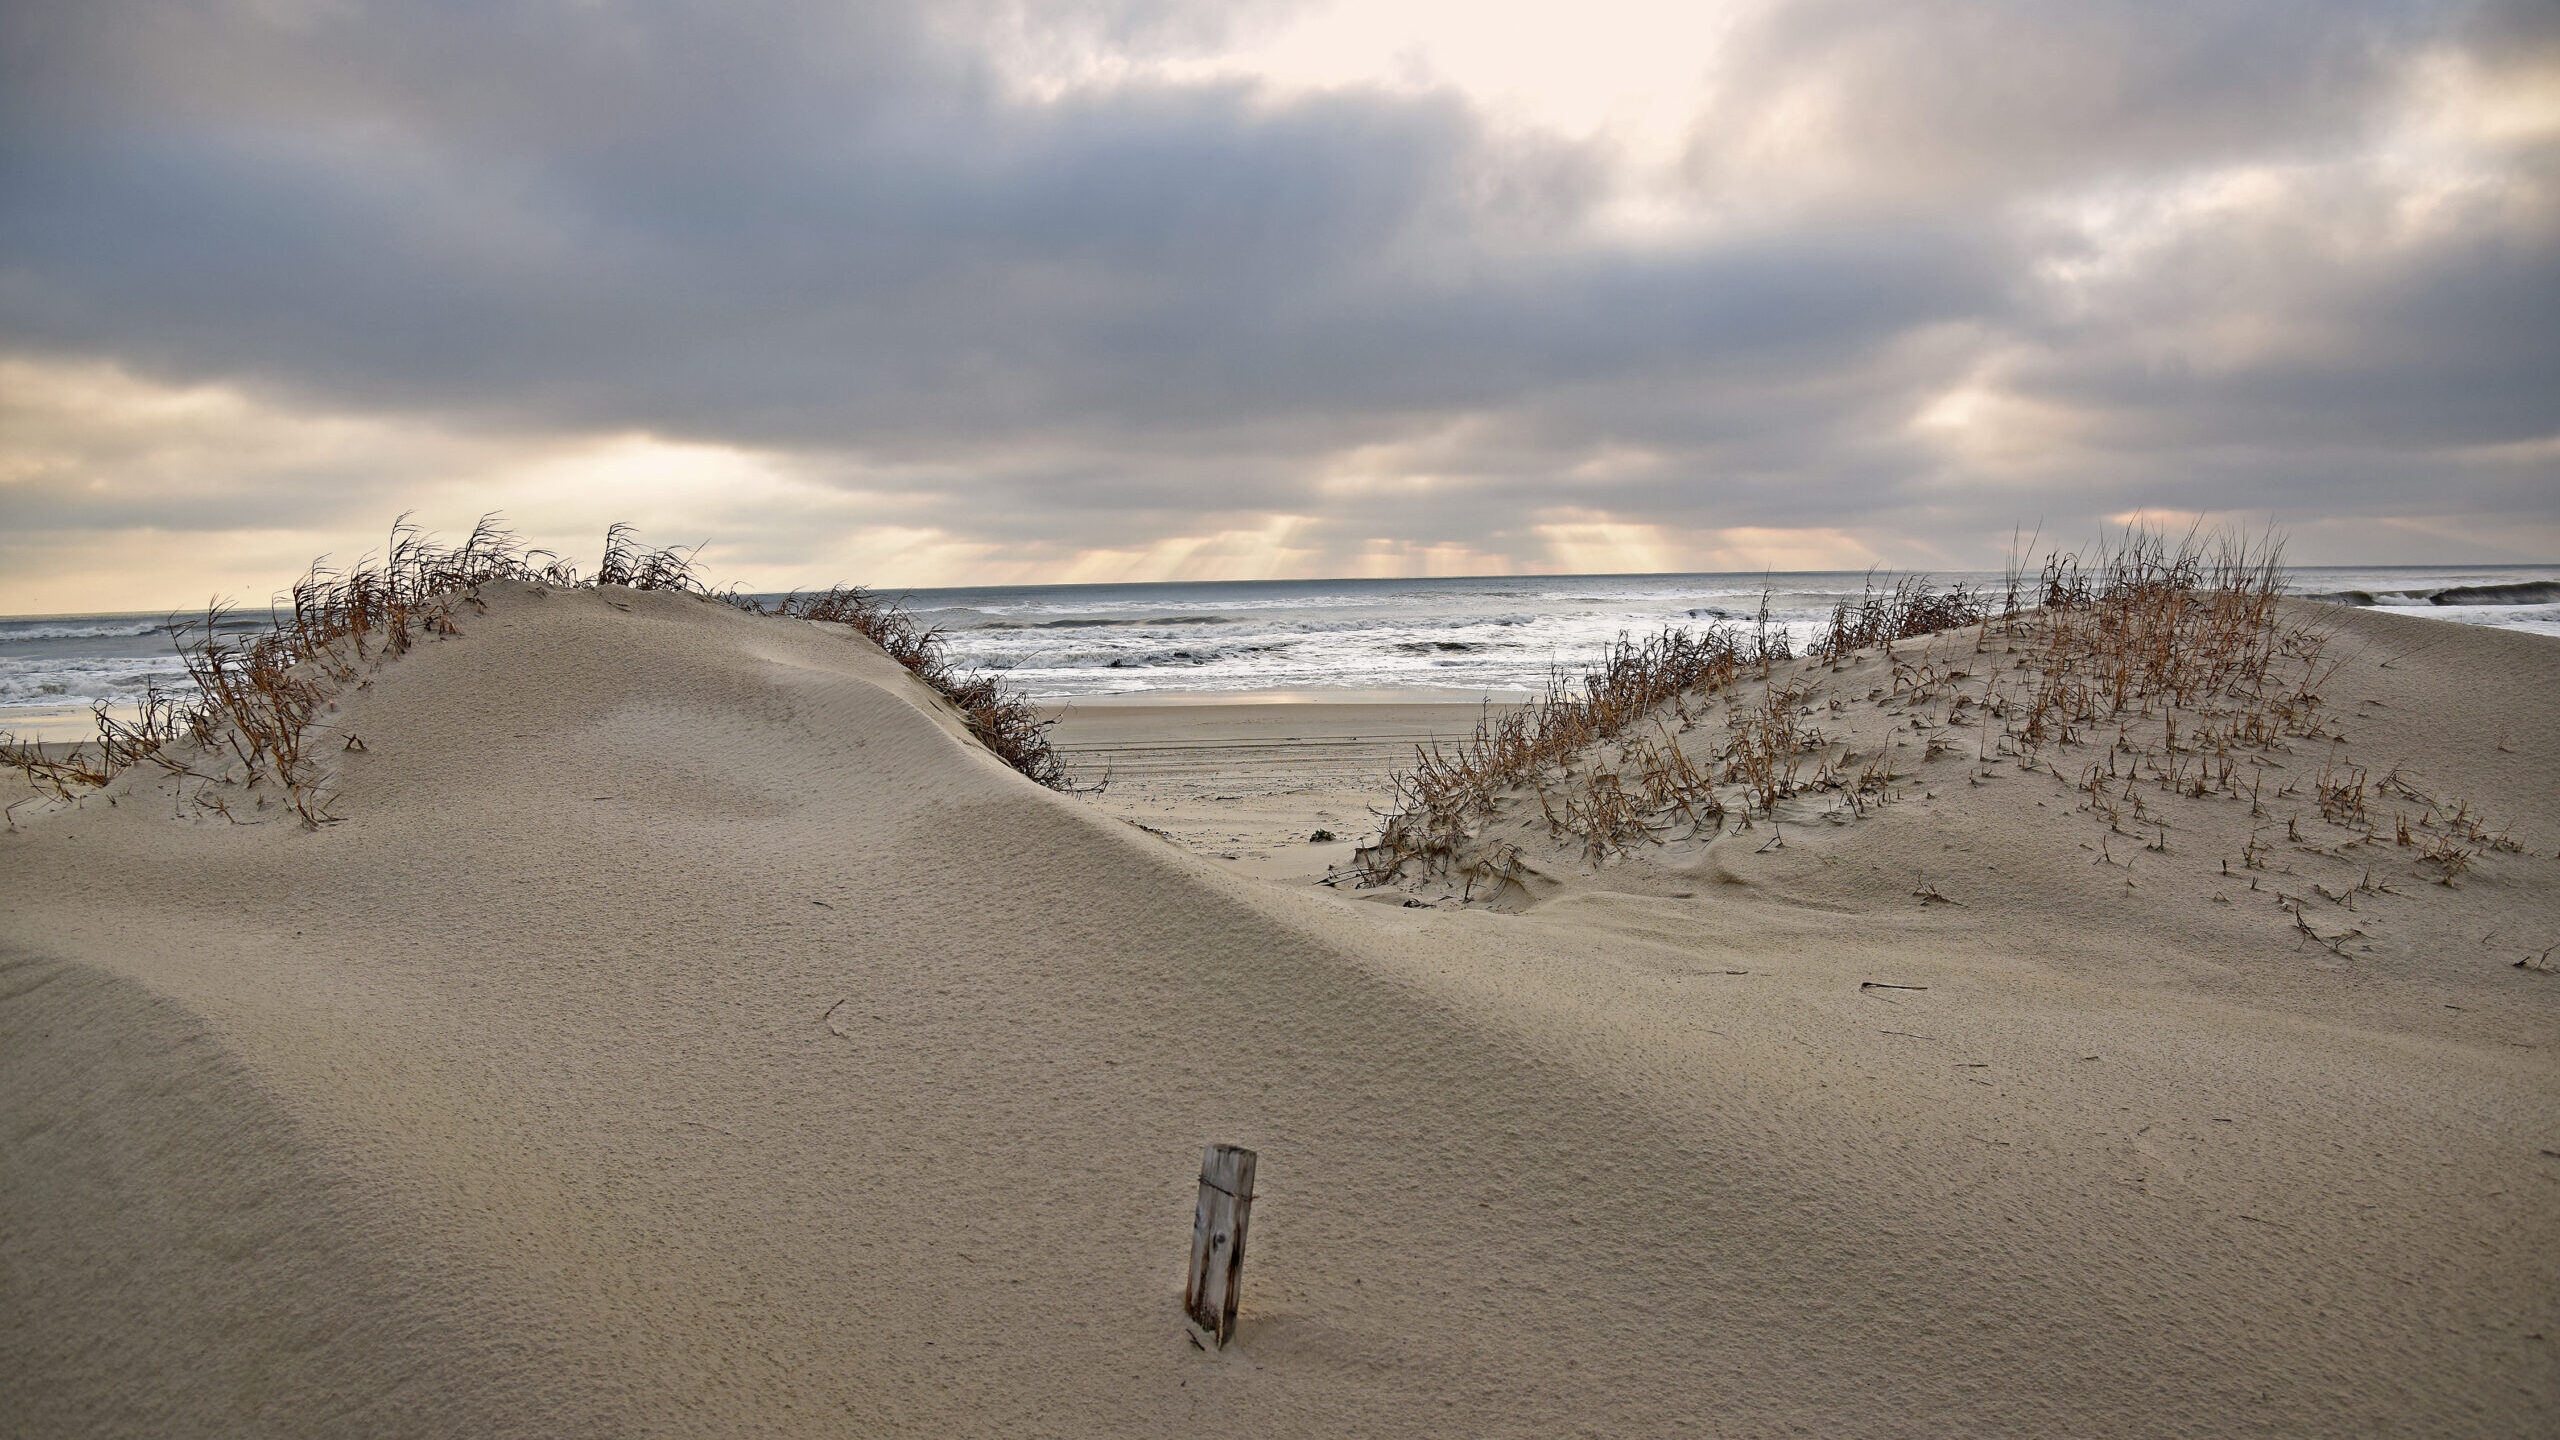 Sea oats on dunes along the Outer Banks